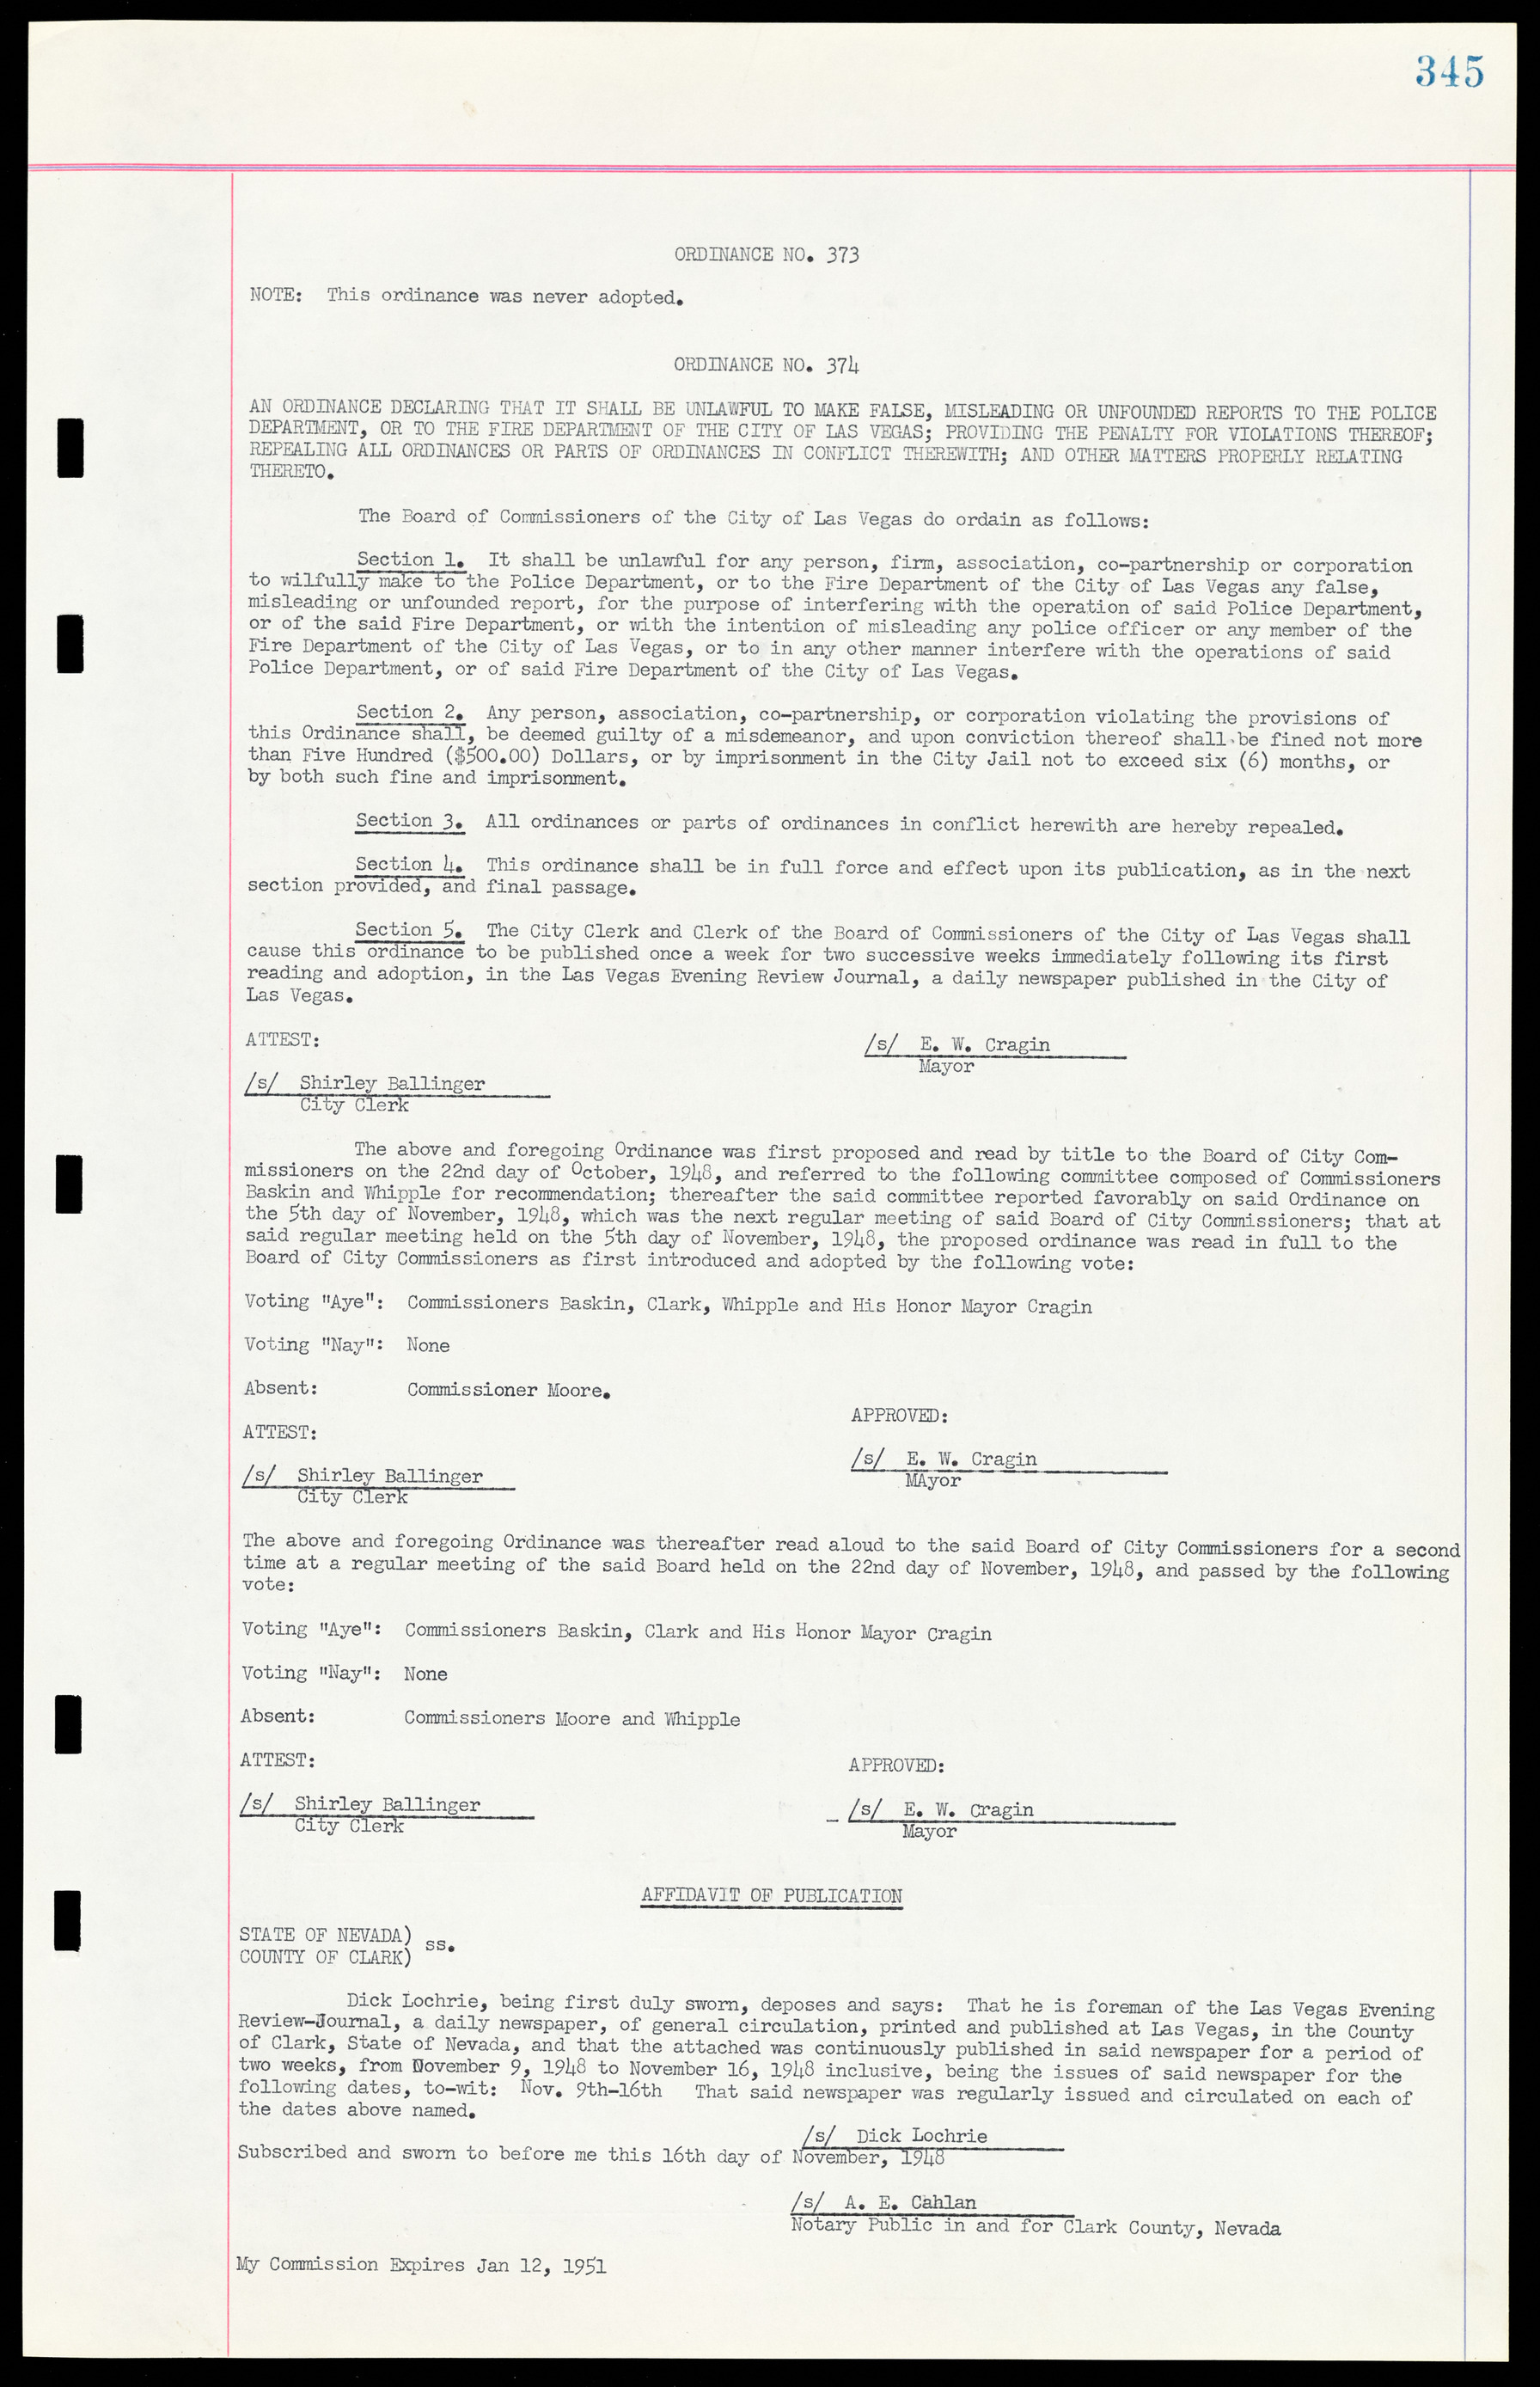 Las Vegas City Ordinances, March 31, 1933 to October 25, 1950, lvc000014-374